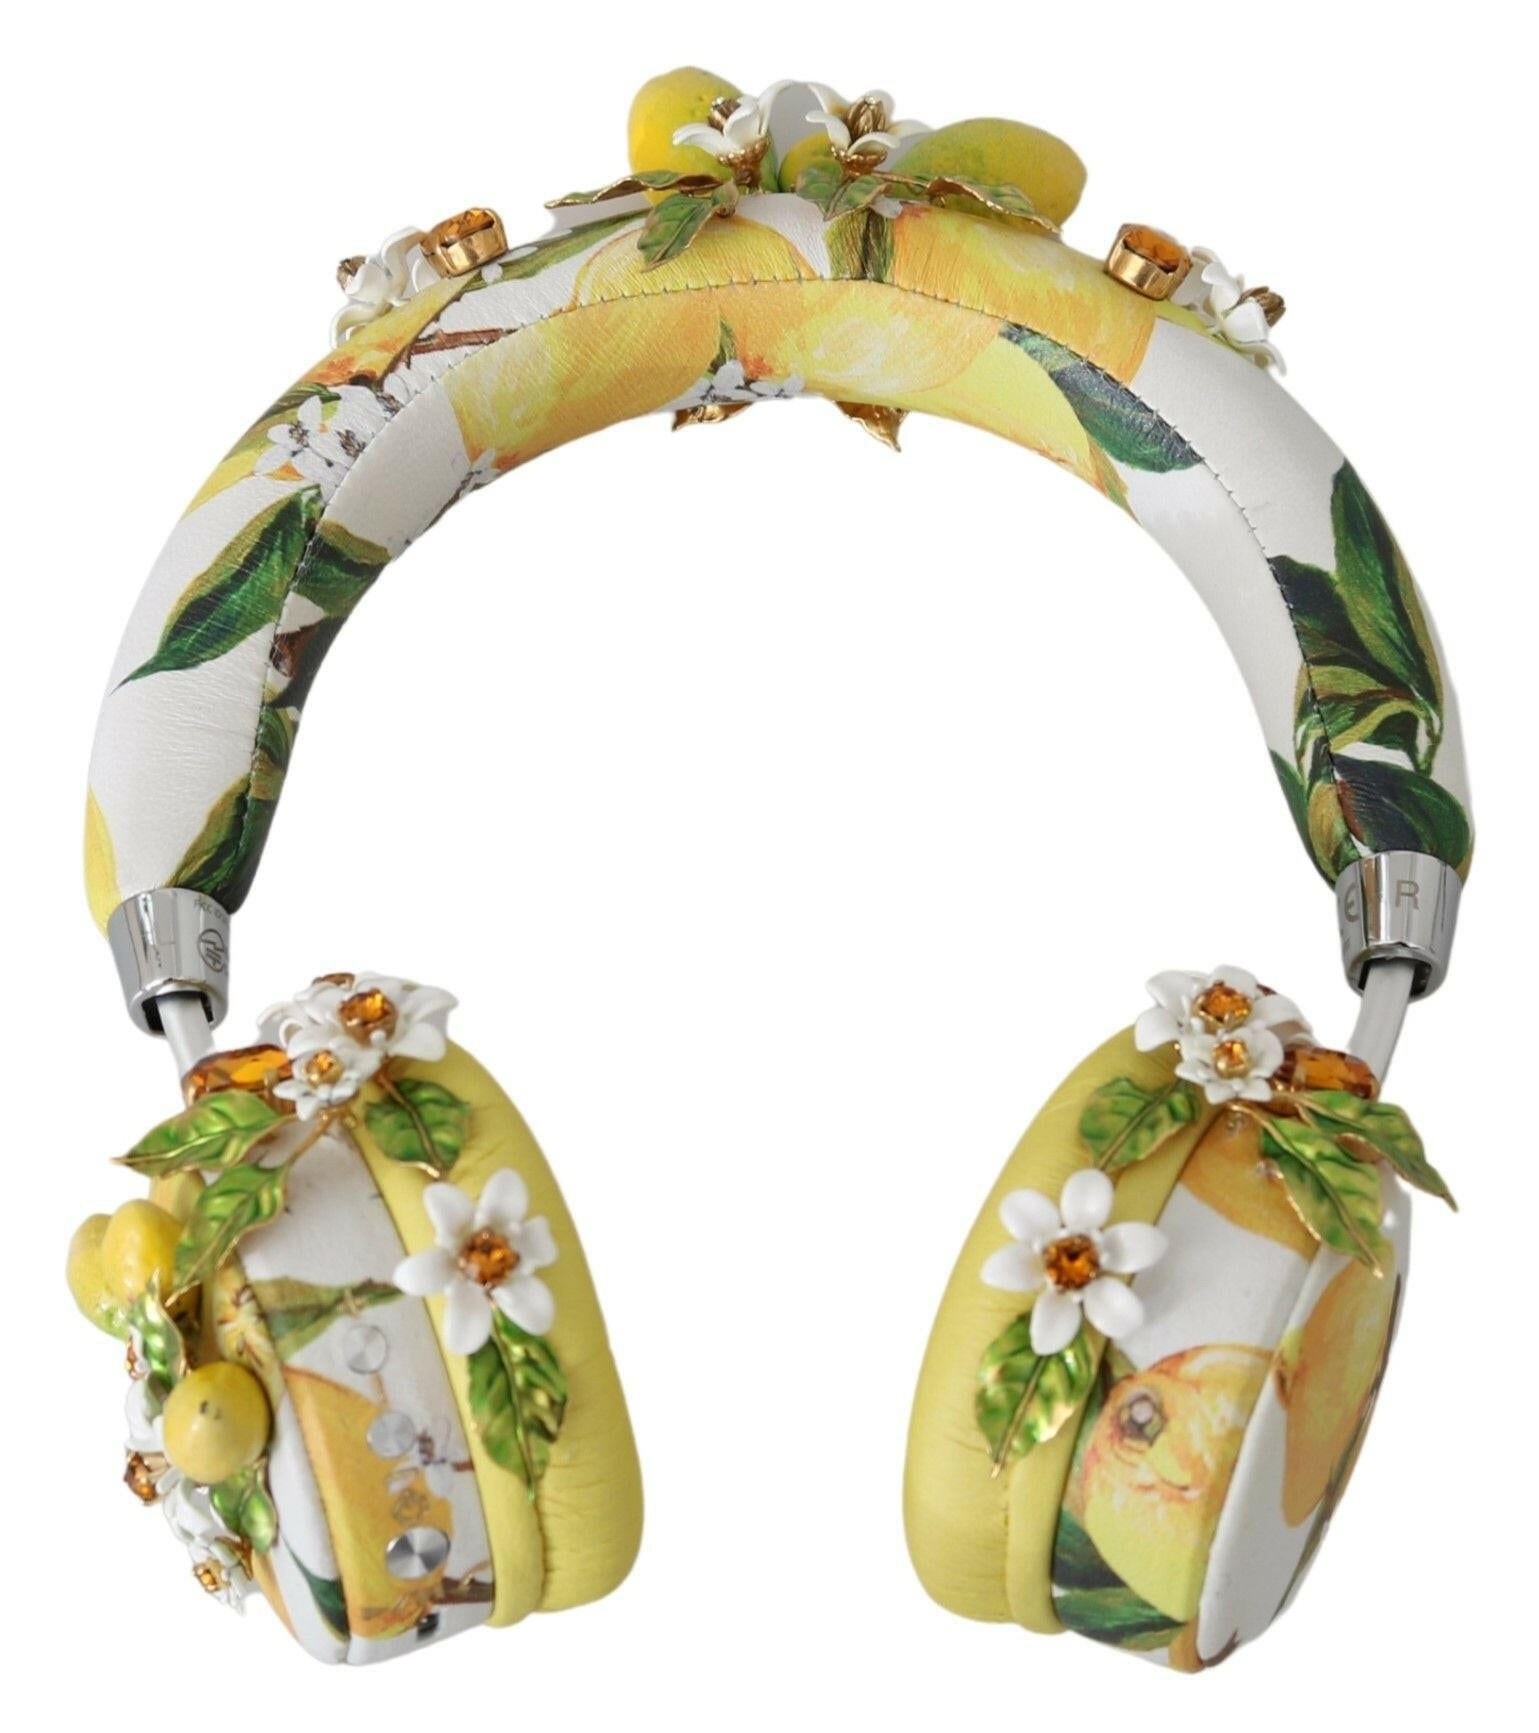 Dolce & Gabbana Yellow Lemon Crystal Floral Headset Headphones - GENUINE AUTHENTIC BRAND LLC  